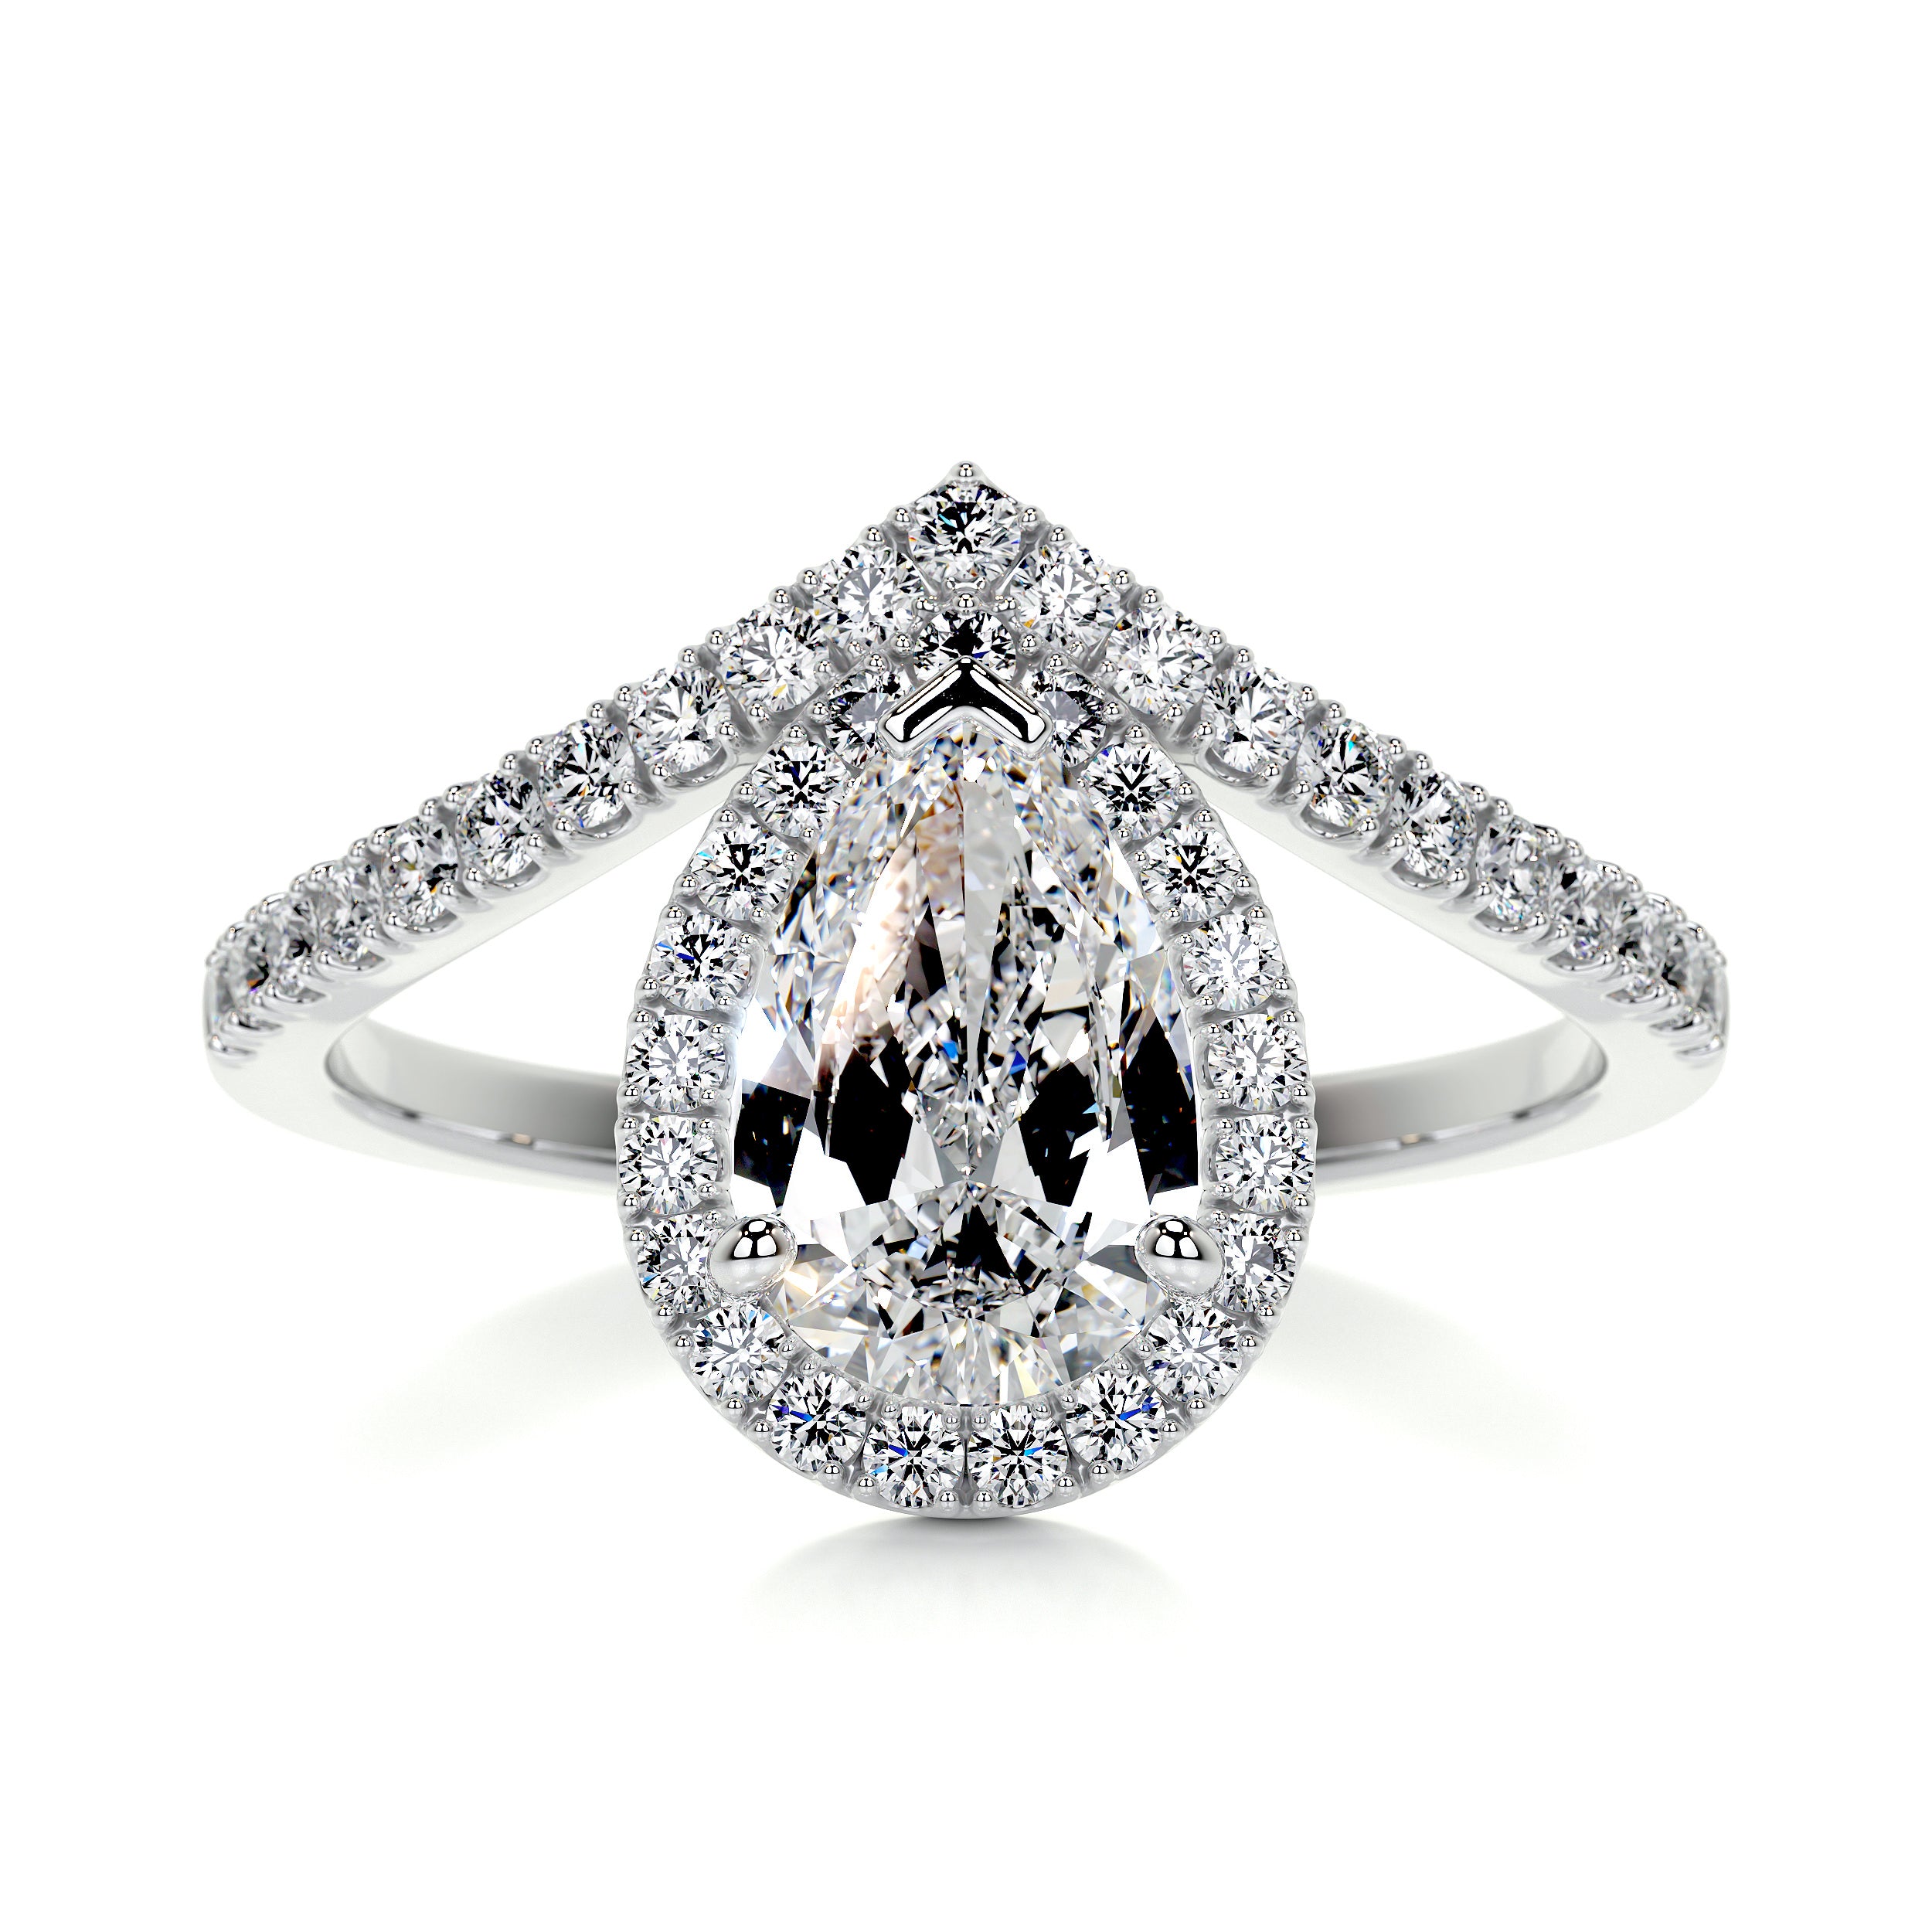 Miranda Diamond Engagement Ring -14K White Gold